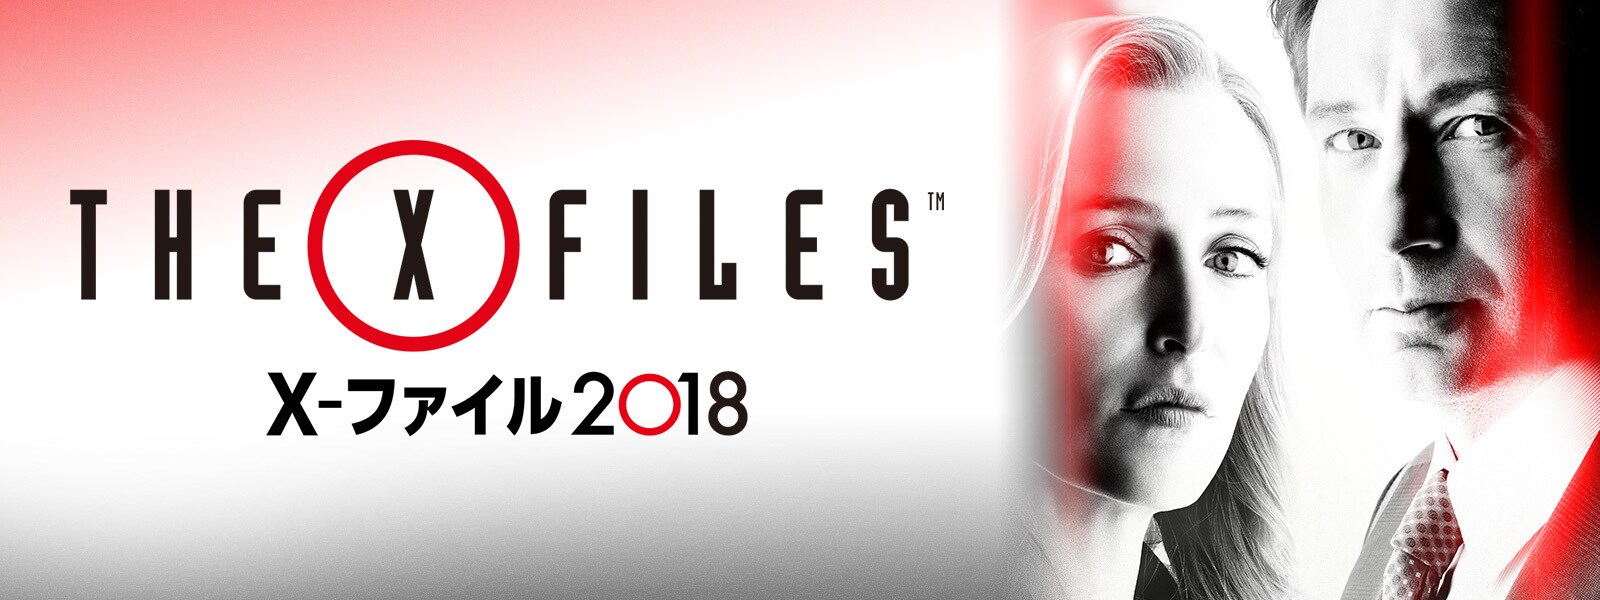 X-ファイル 2018｜The X-Files Season 11 Hero Object  Draft